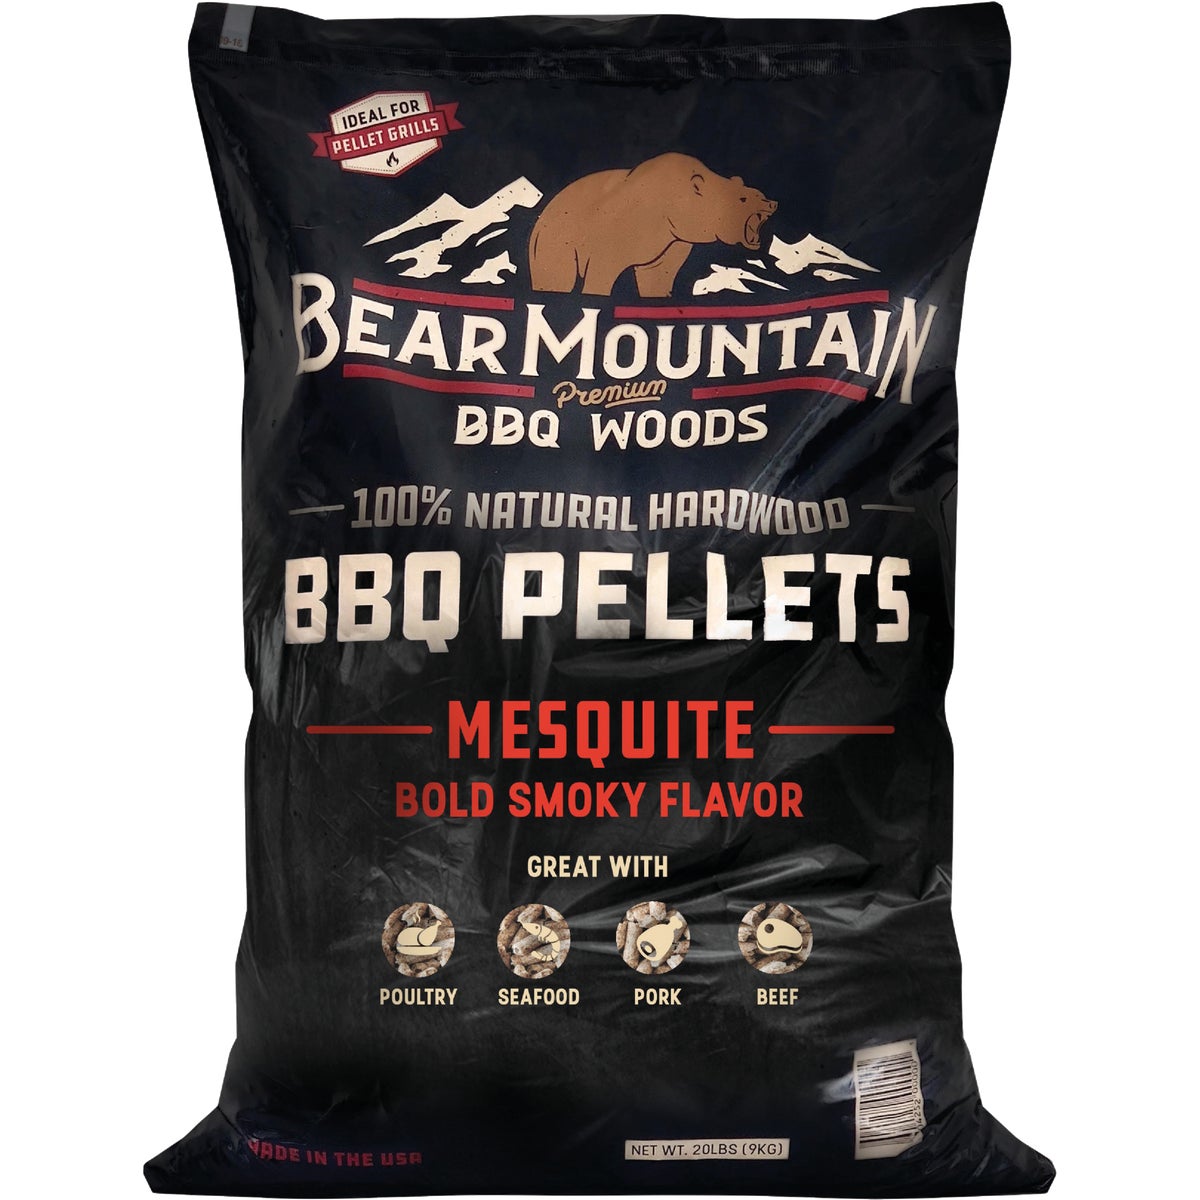 Bear Mountain BBQ Premium Woods 20 Lb. Mesquite Wood Pellet